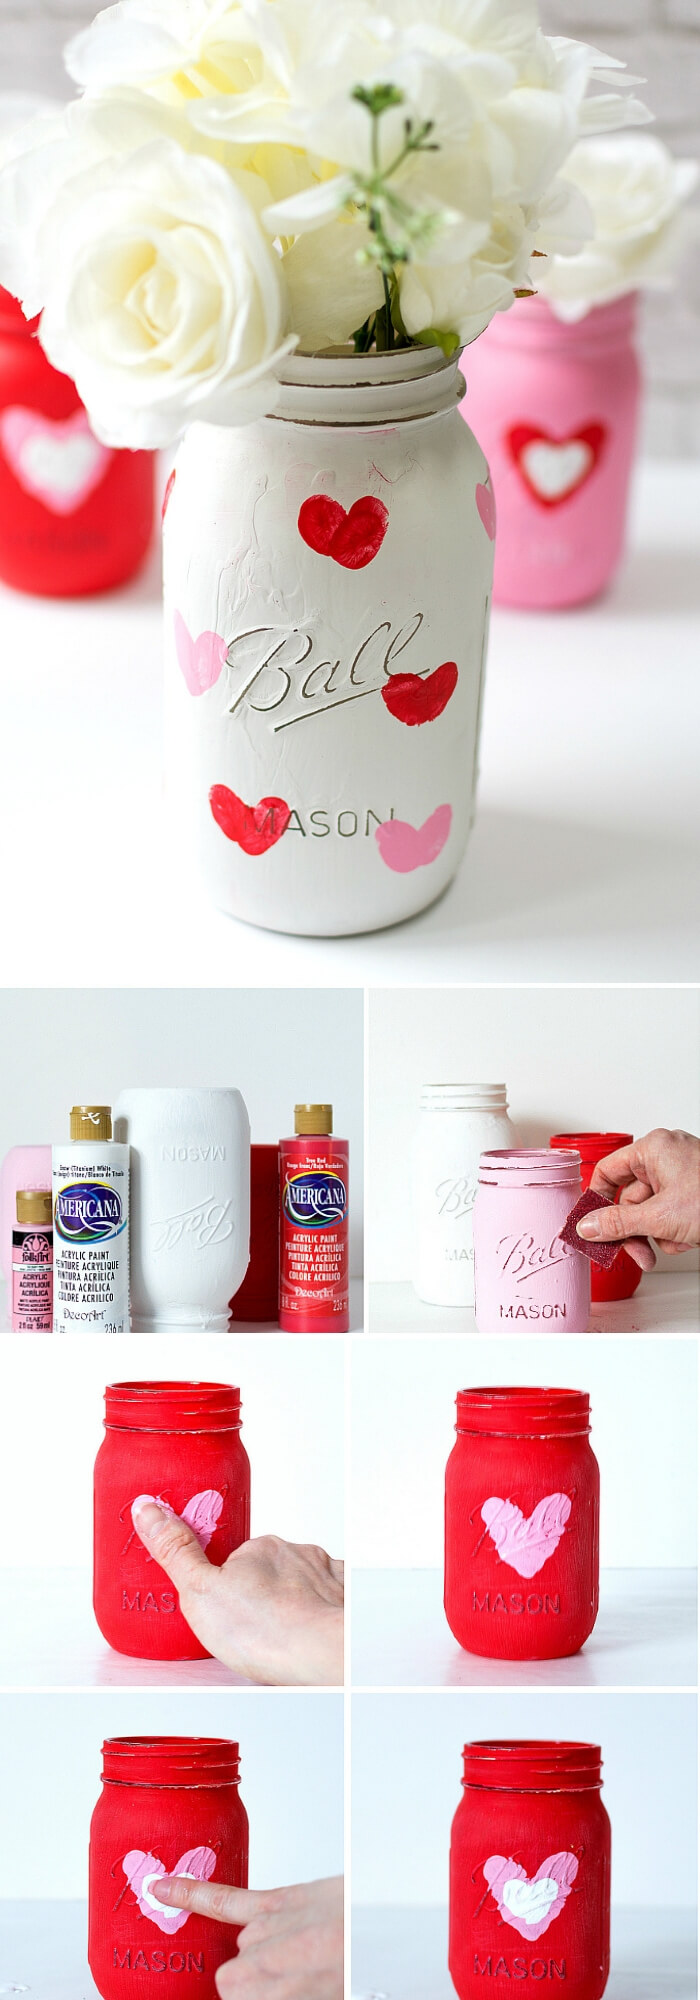 Valentine Kid Craft Thumbprint Heart Jars | DIY Mason Jar Gift Ideas For Valentine's Day | FarmFoodFamily.com